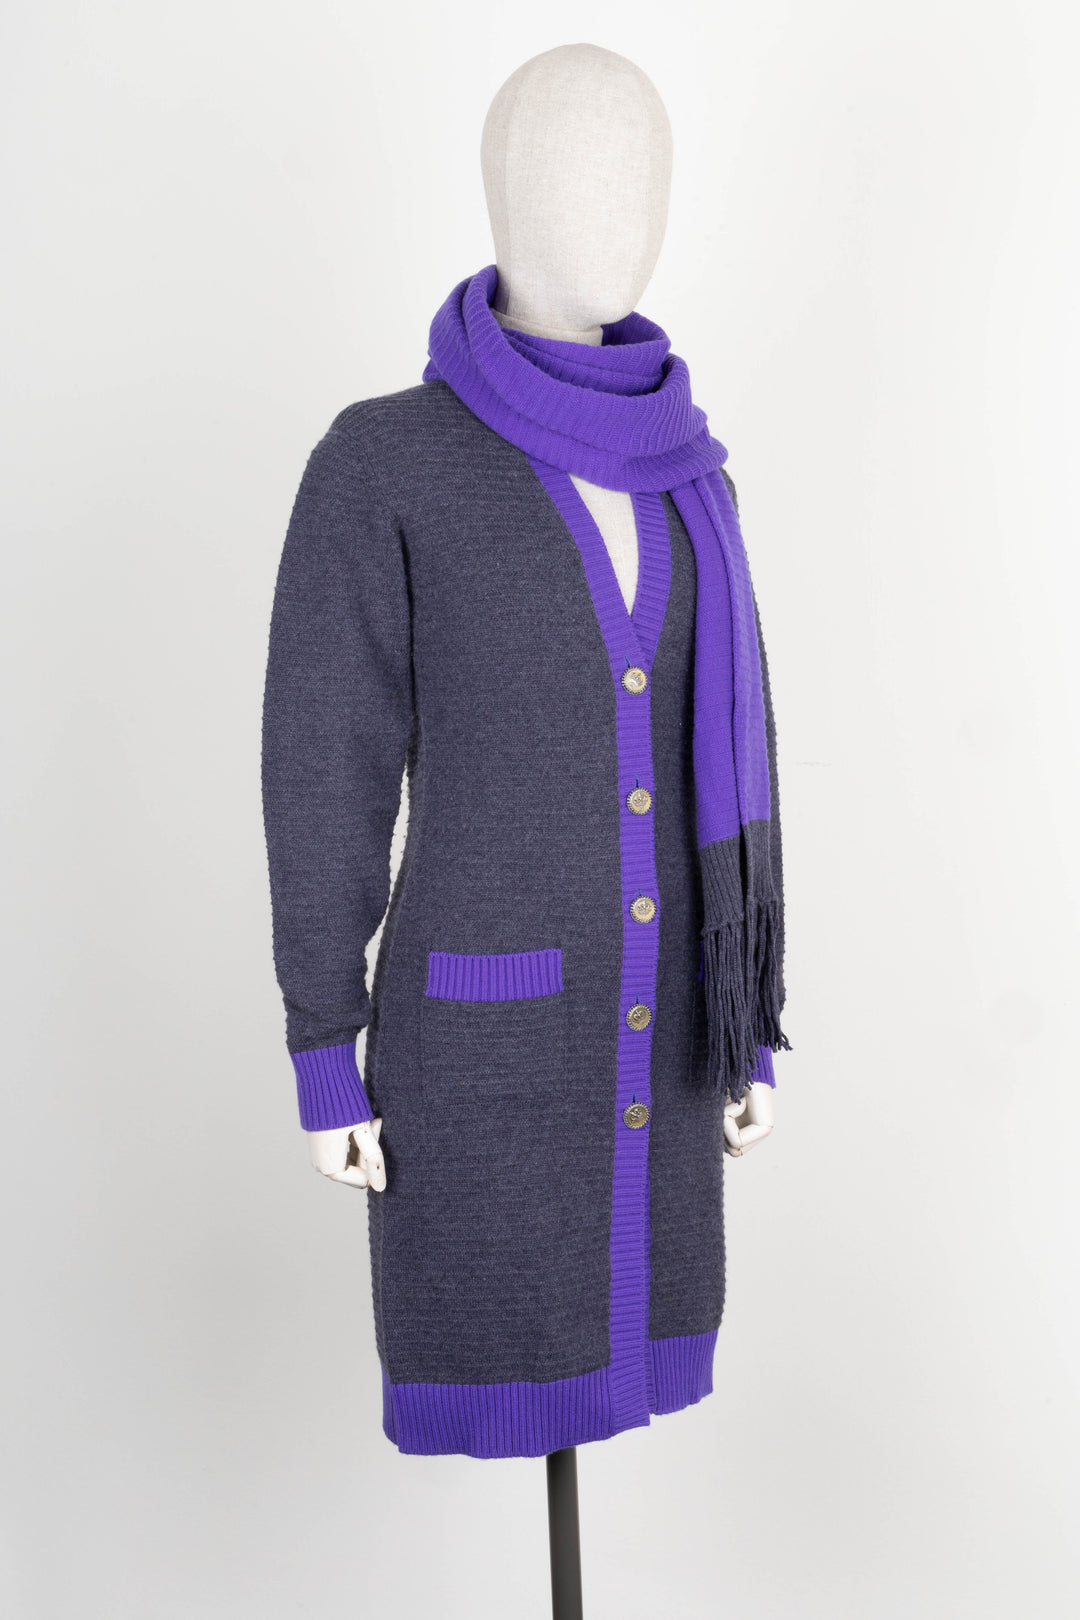 CHANEL Two Piece Knit Cashmere Grey & Purple 08 Autumn